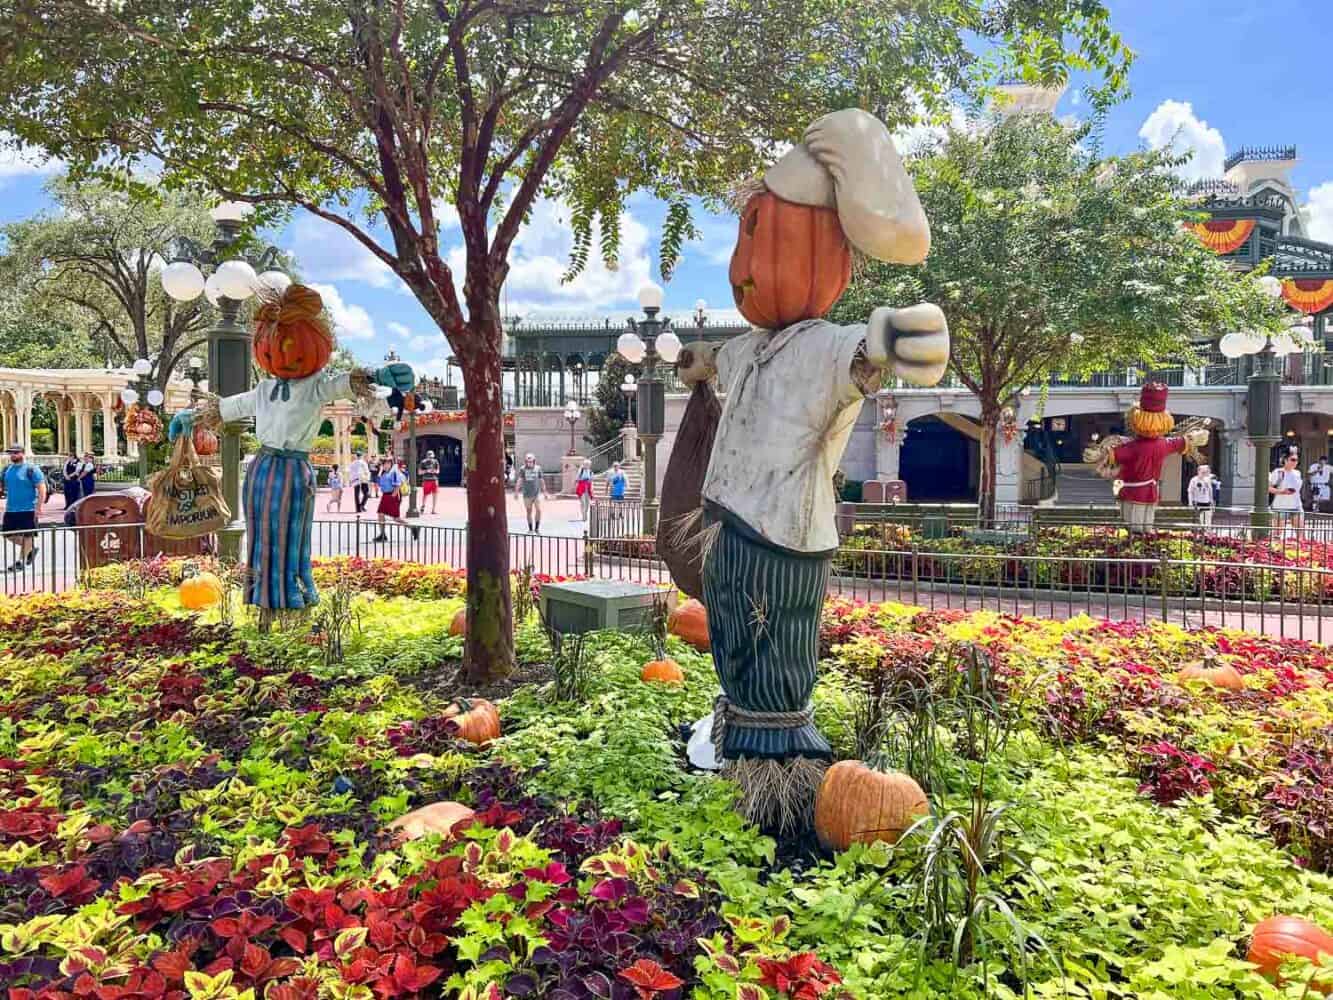 Halloween pumpkin patch with scarecrows, Magic Kingdom, Disney World